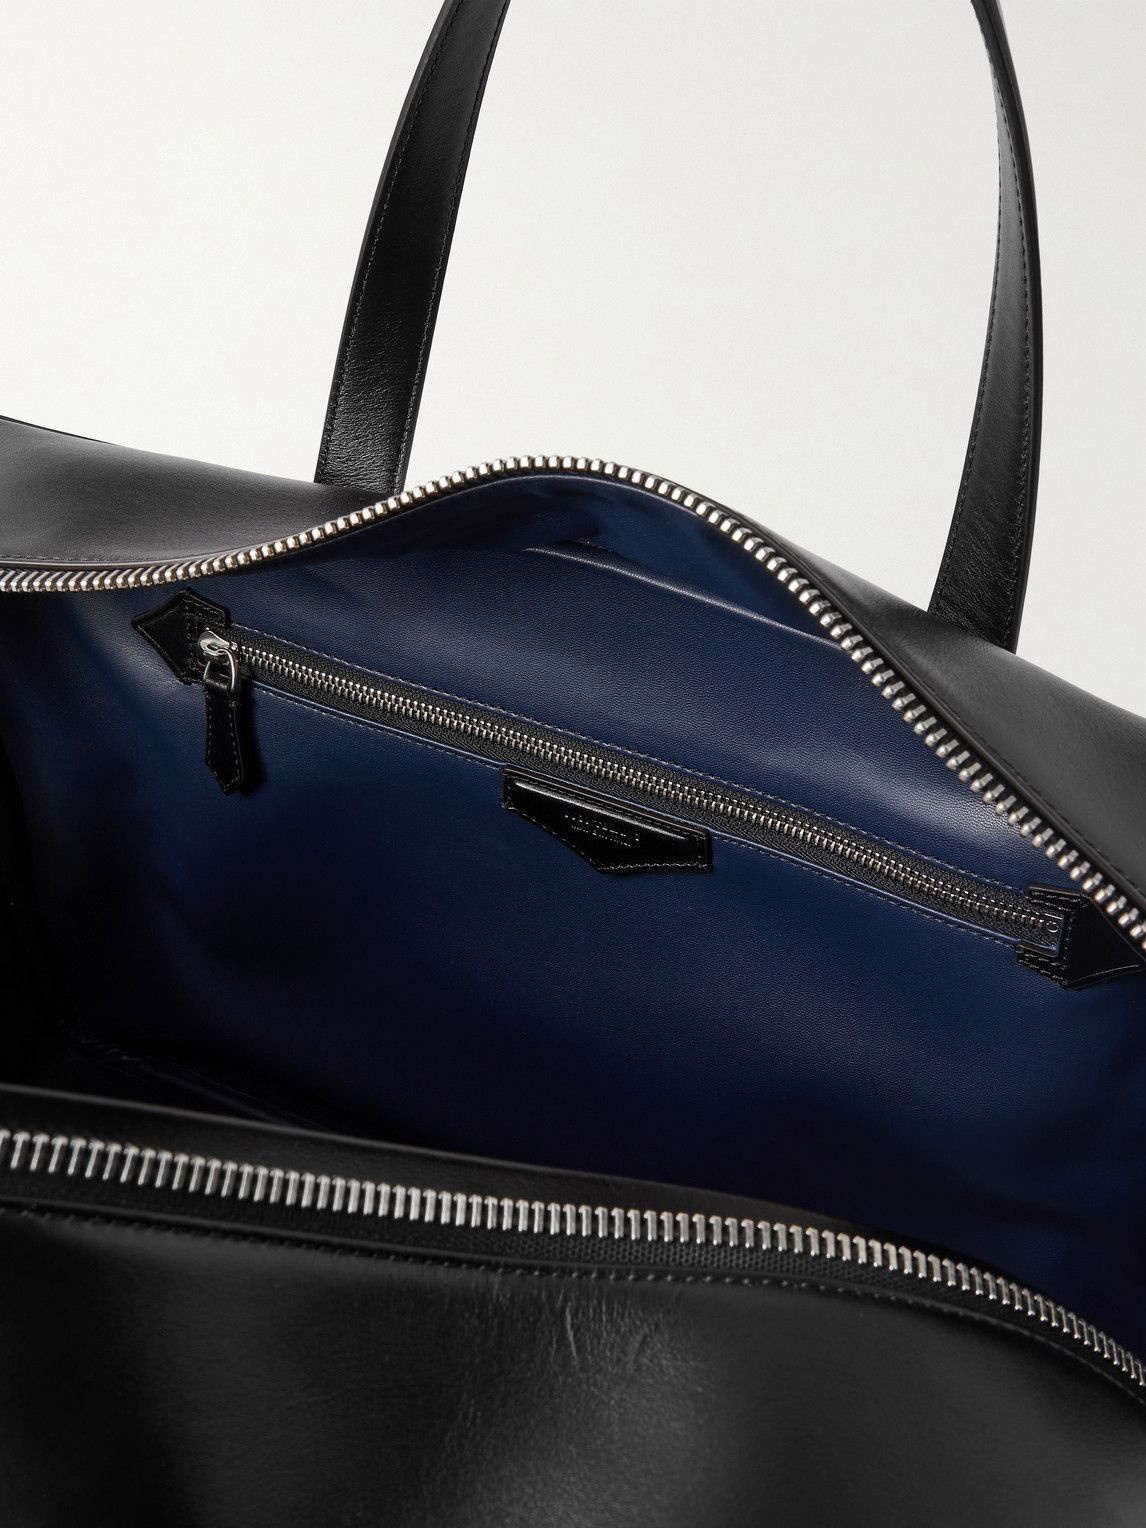 Montblanc Meisterstuck Soft Grain Leather Medium Duffle Bag - Black